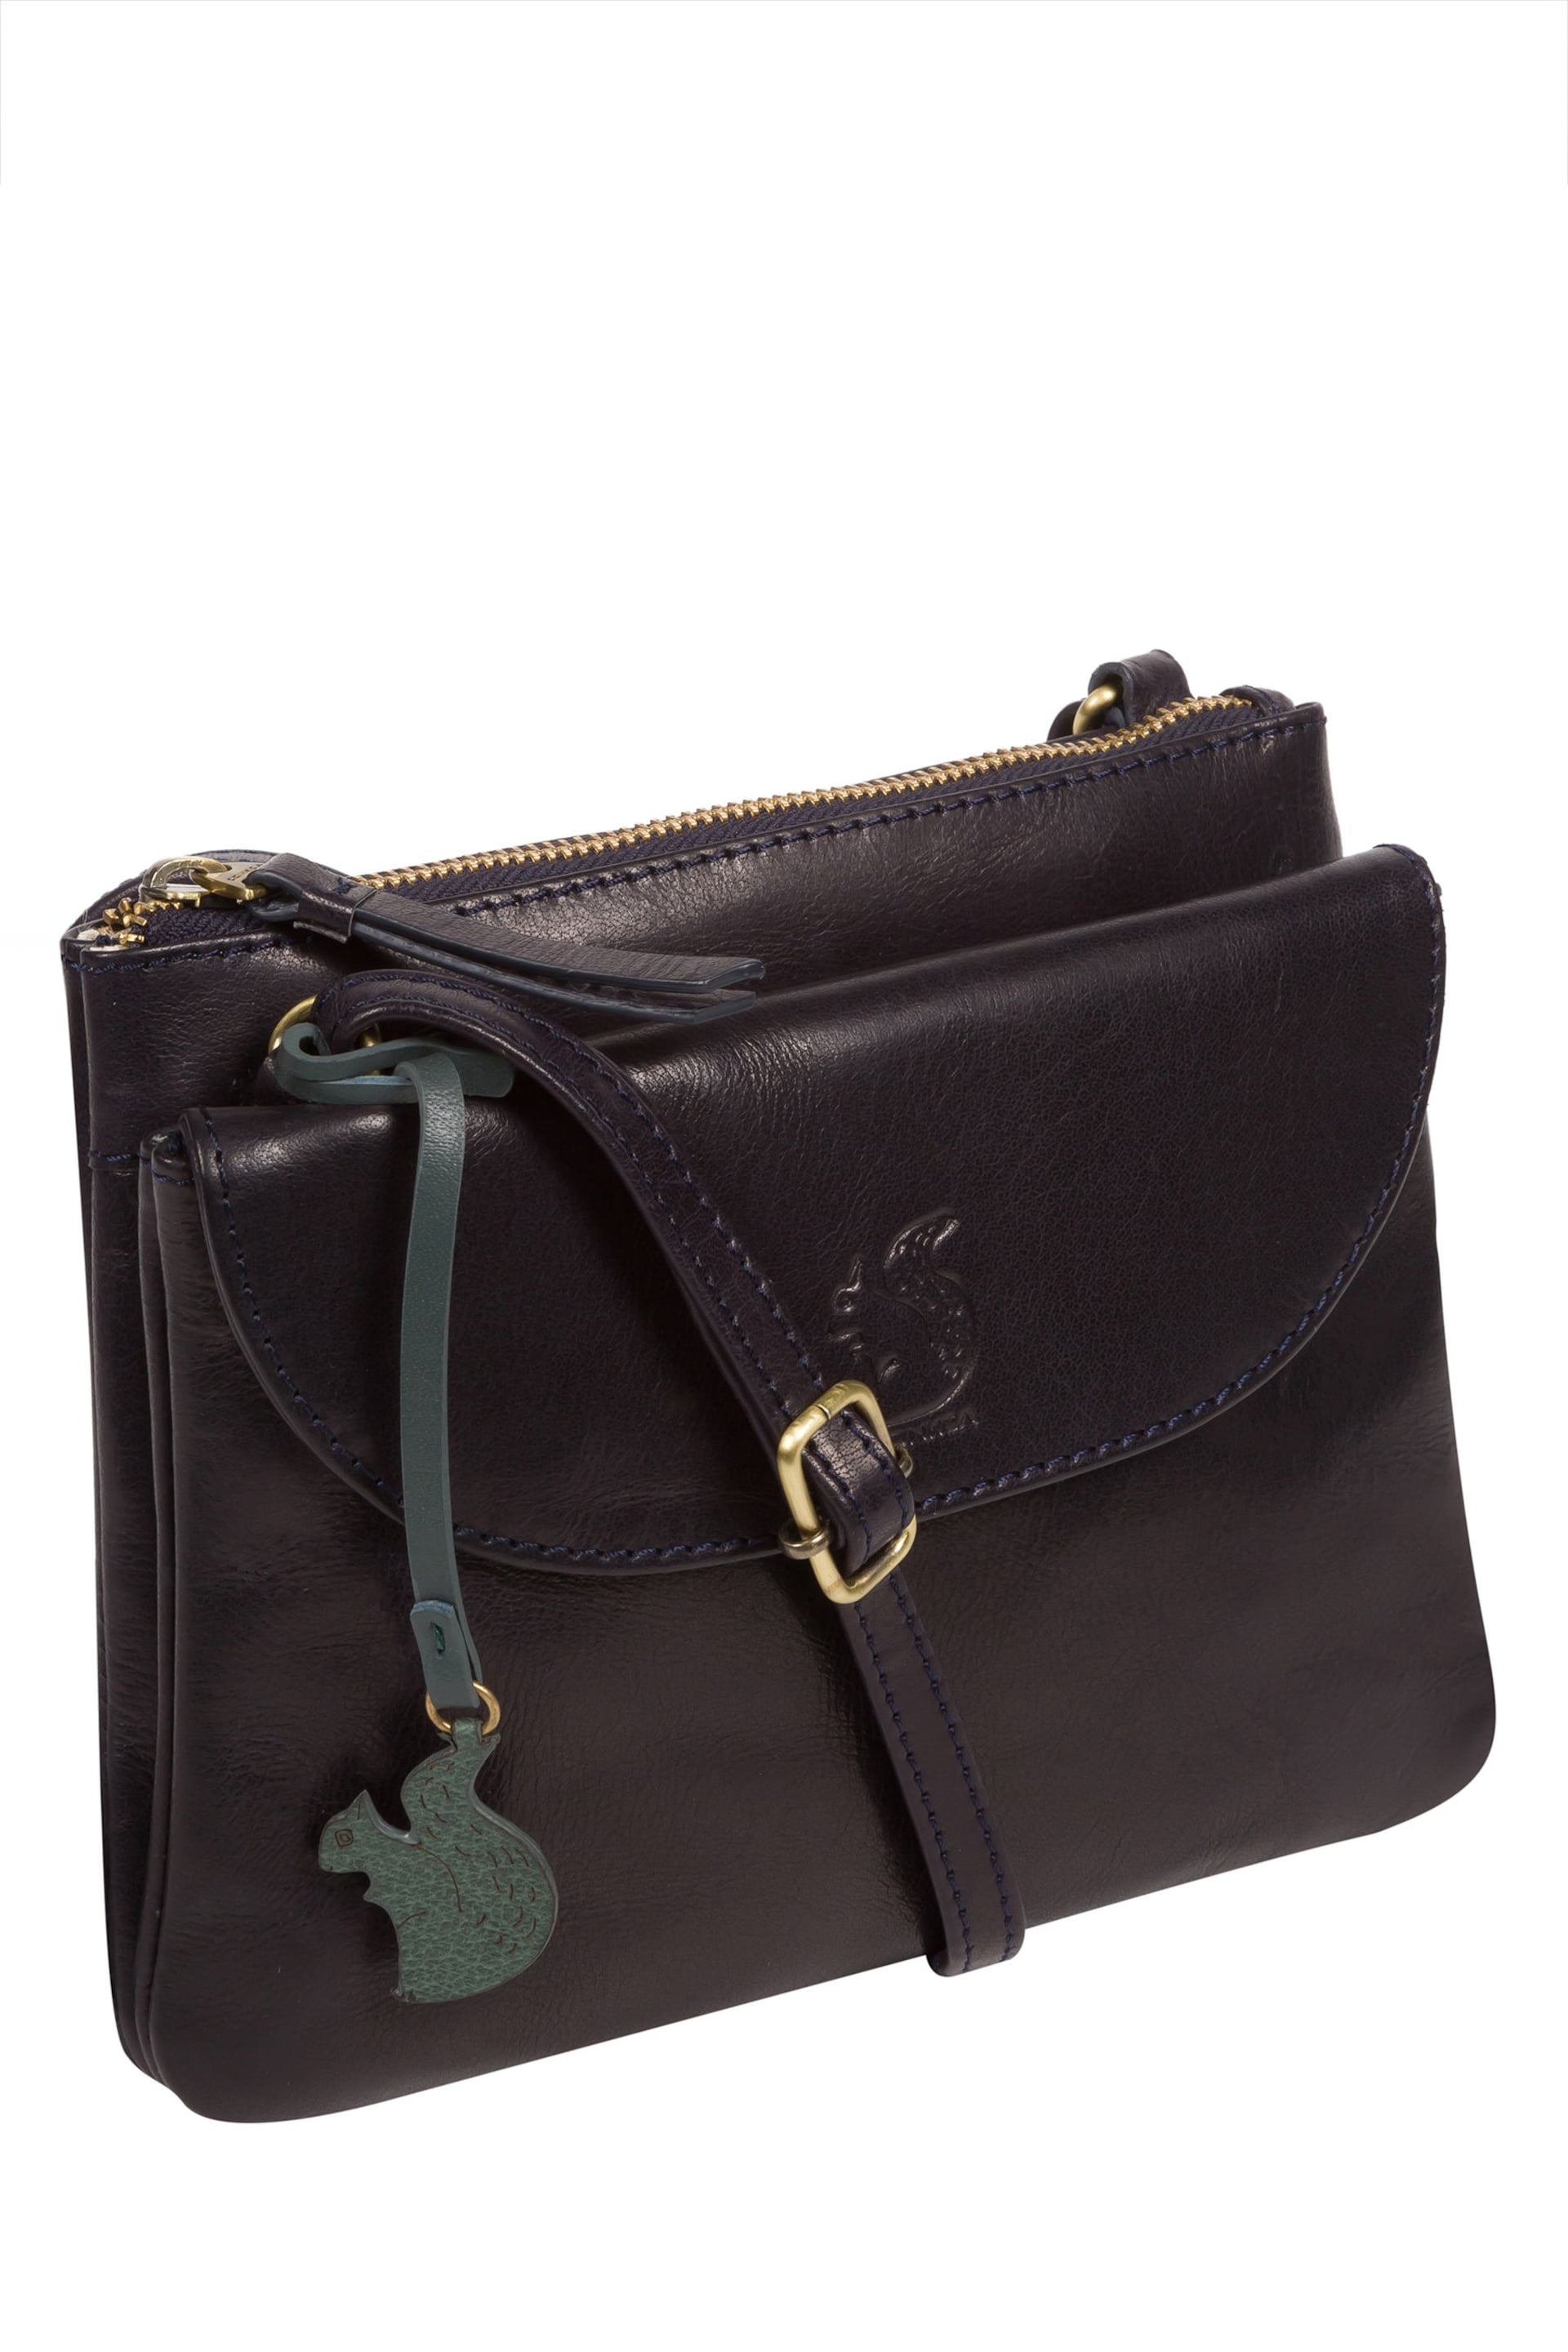 Conkca Tillie Leather Cross-Body Bag - Image 5 of 6